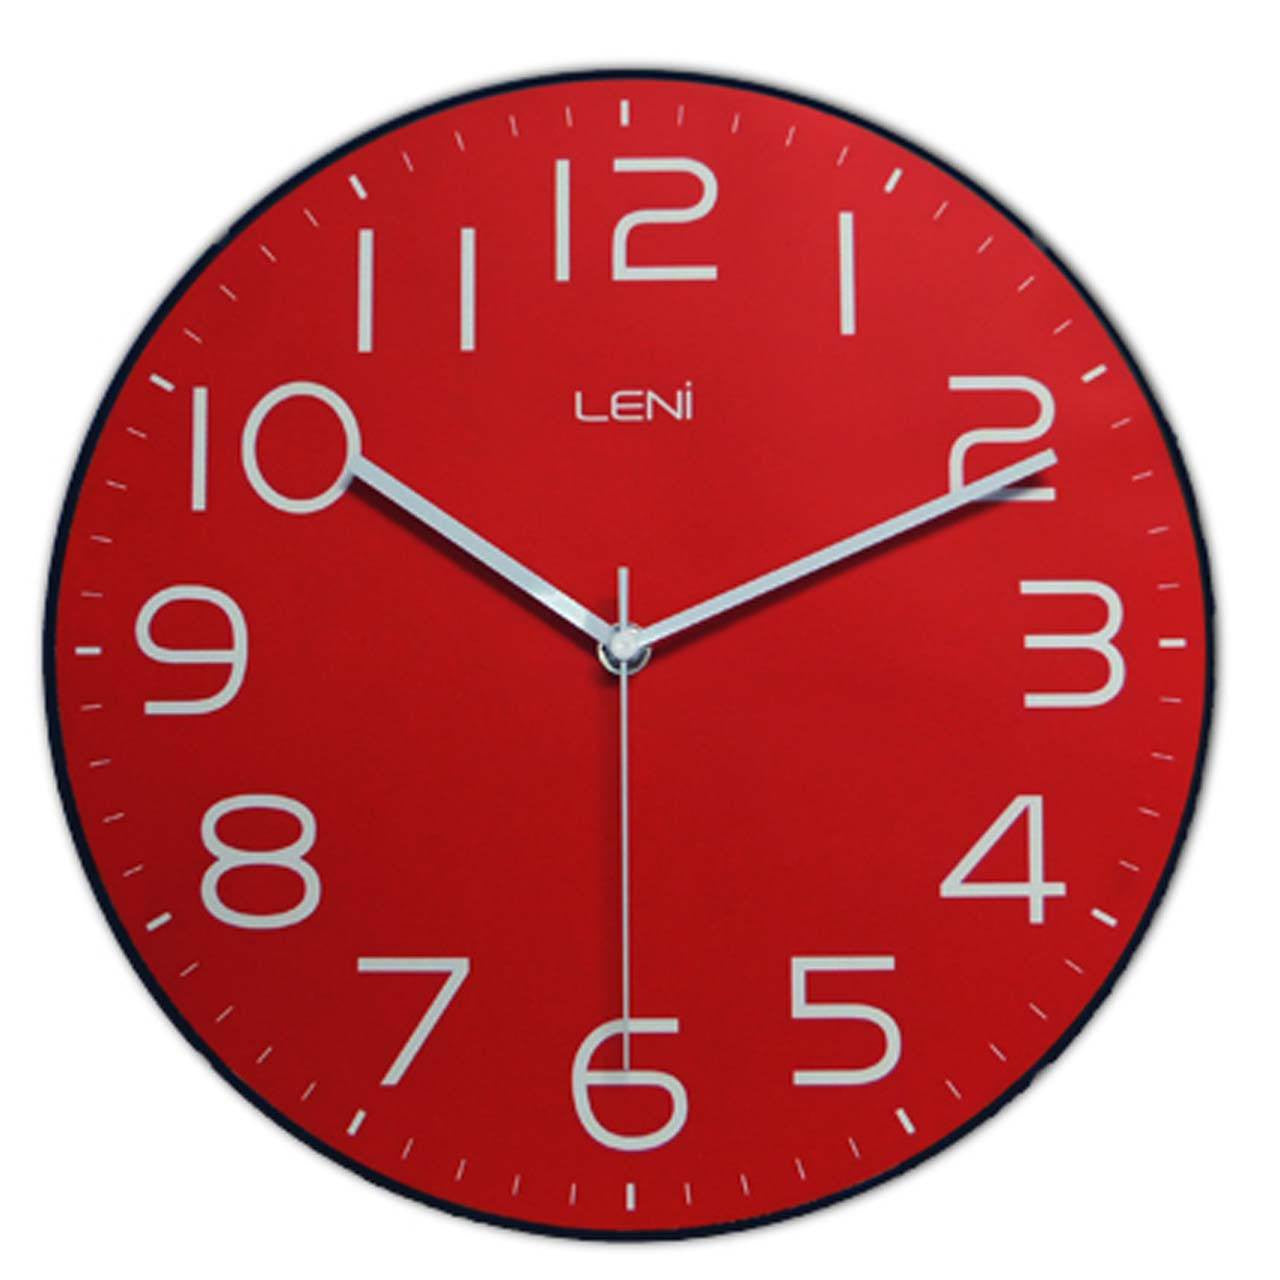 red clocks leni zumas